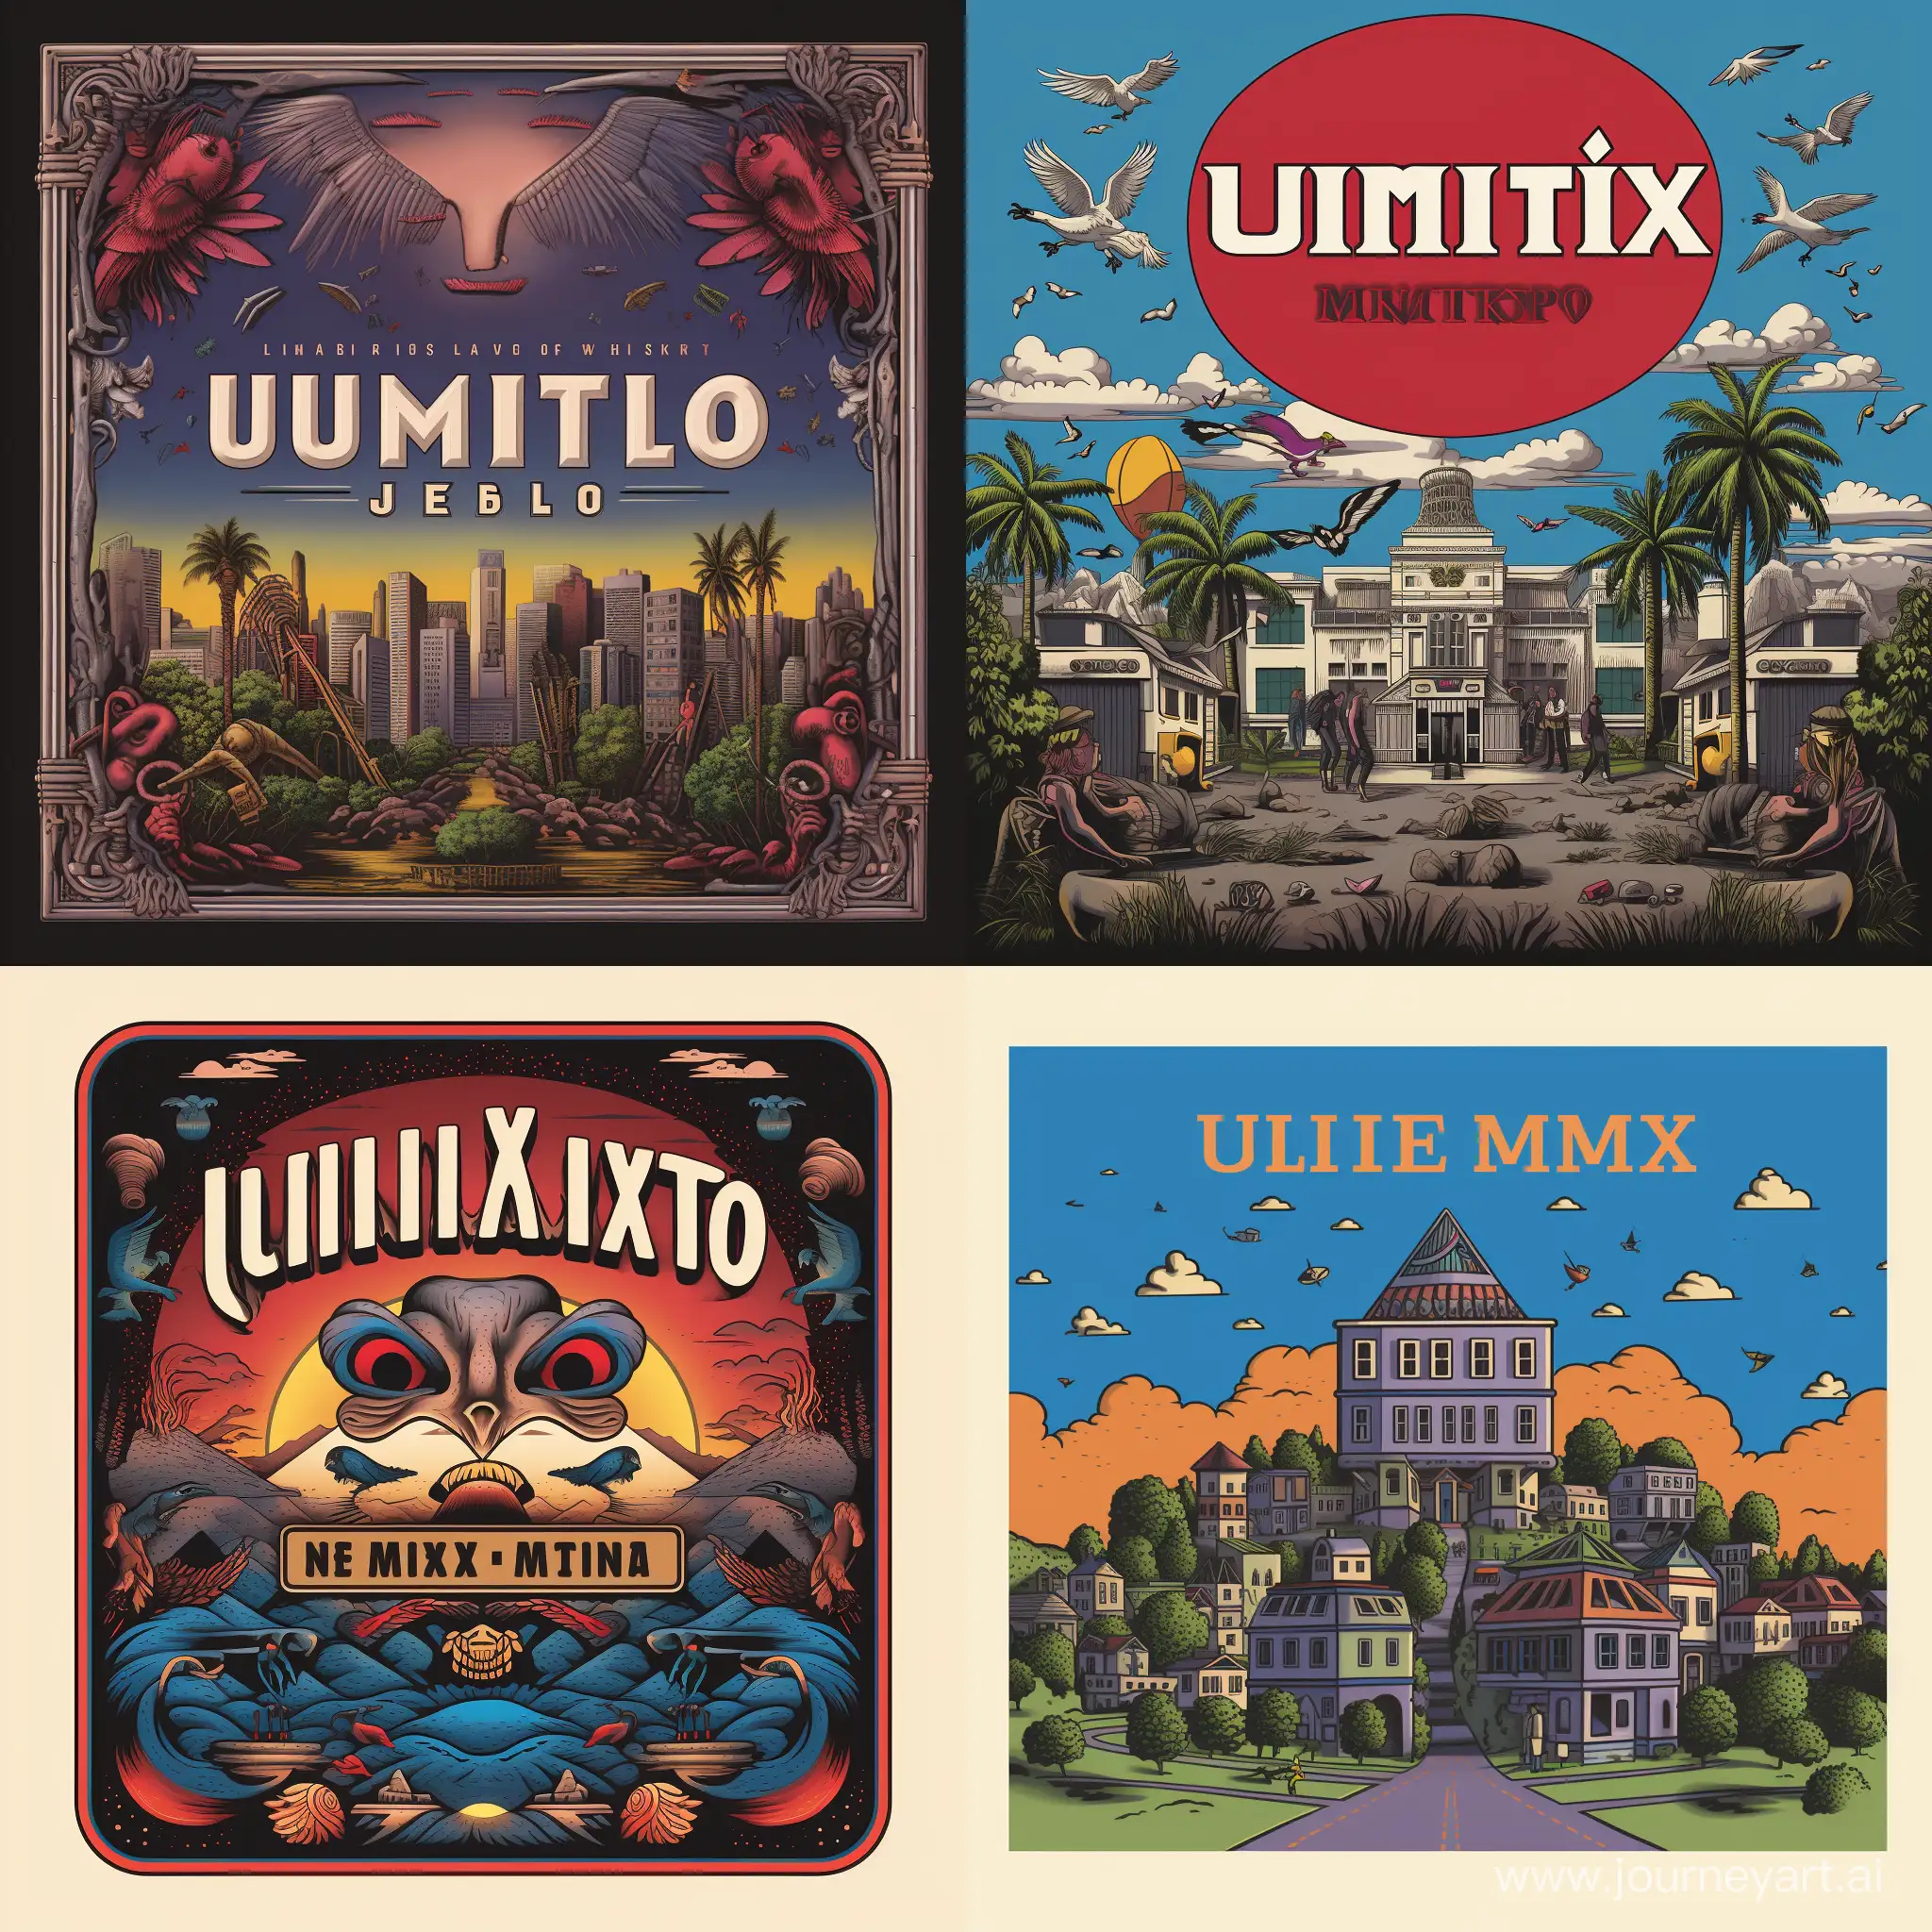 Ultimate-Nostalgia-Retro-Culture-Collage-with-ULTIMIX-Inscription